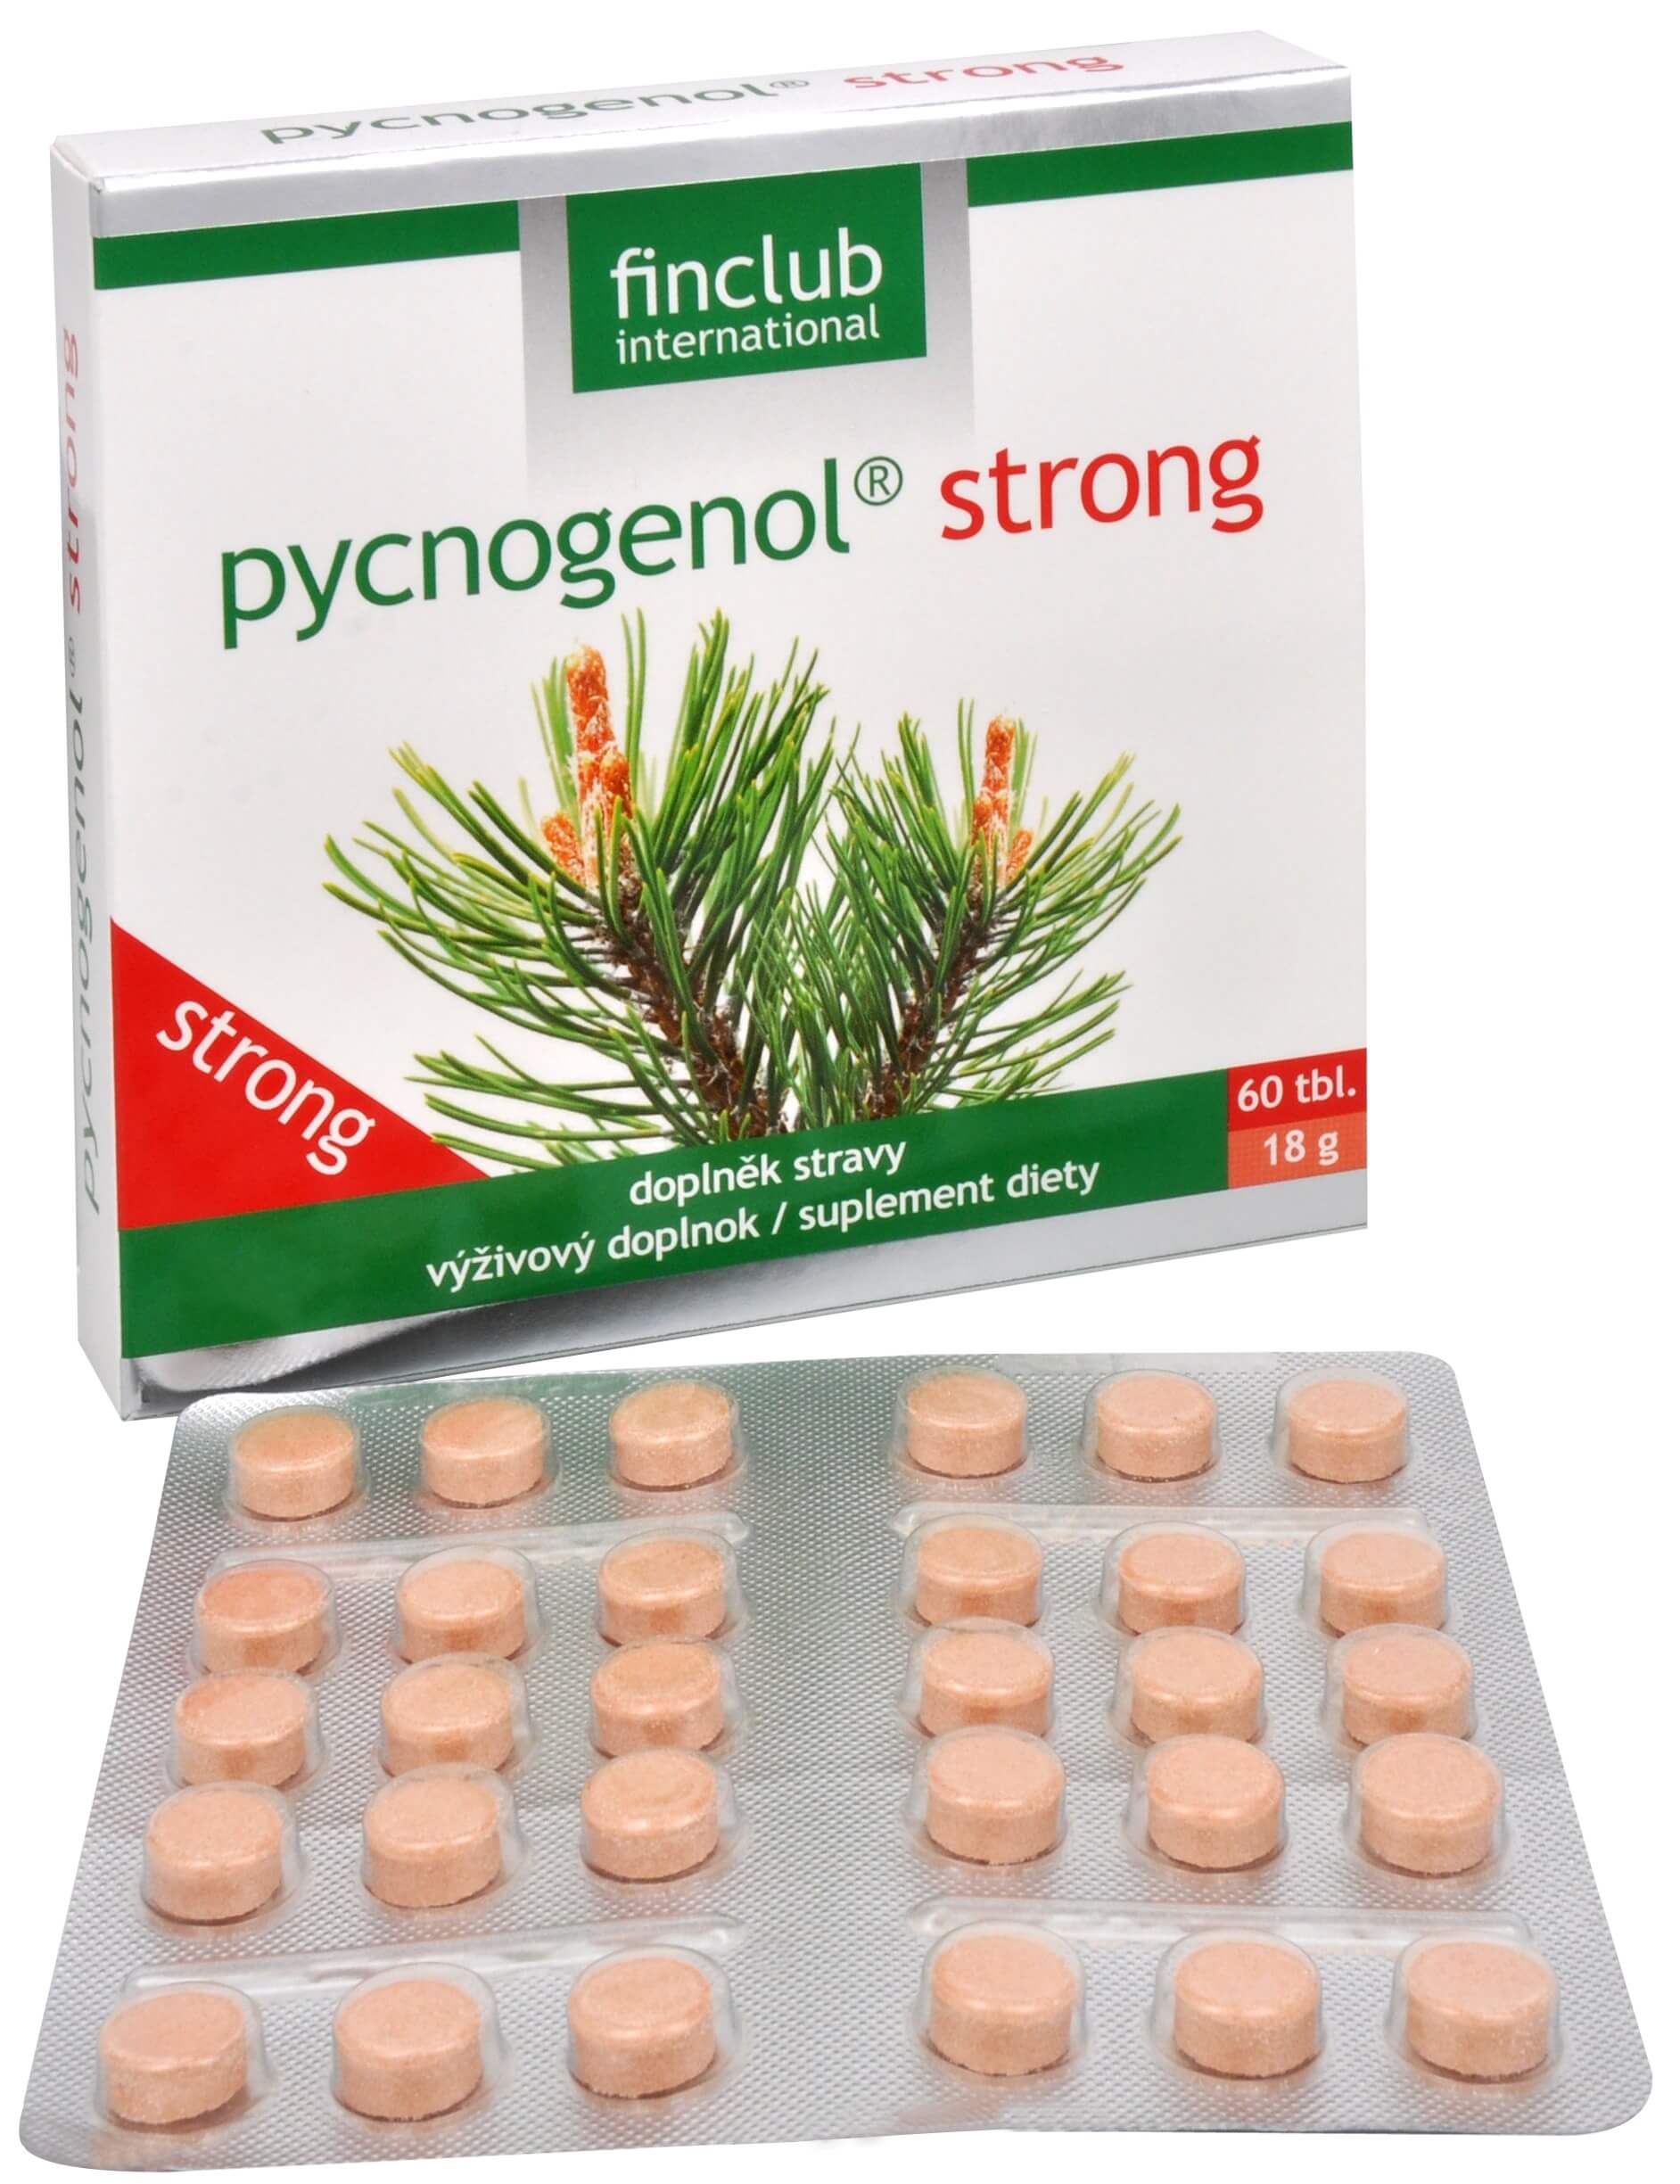 Zobrazit detail výrobku Finclub Pycnogenol Strong 60 tbl.